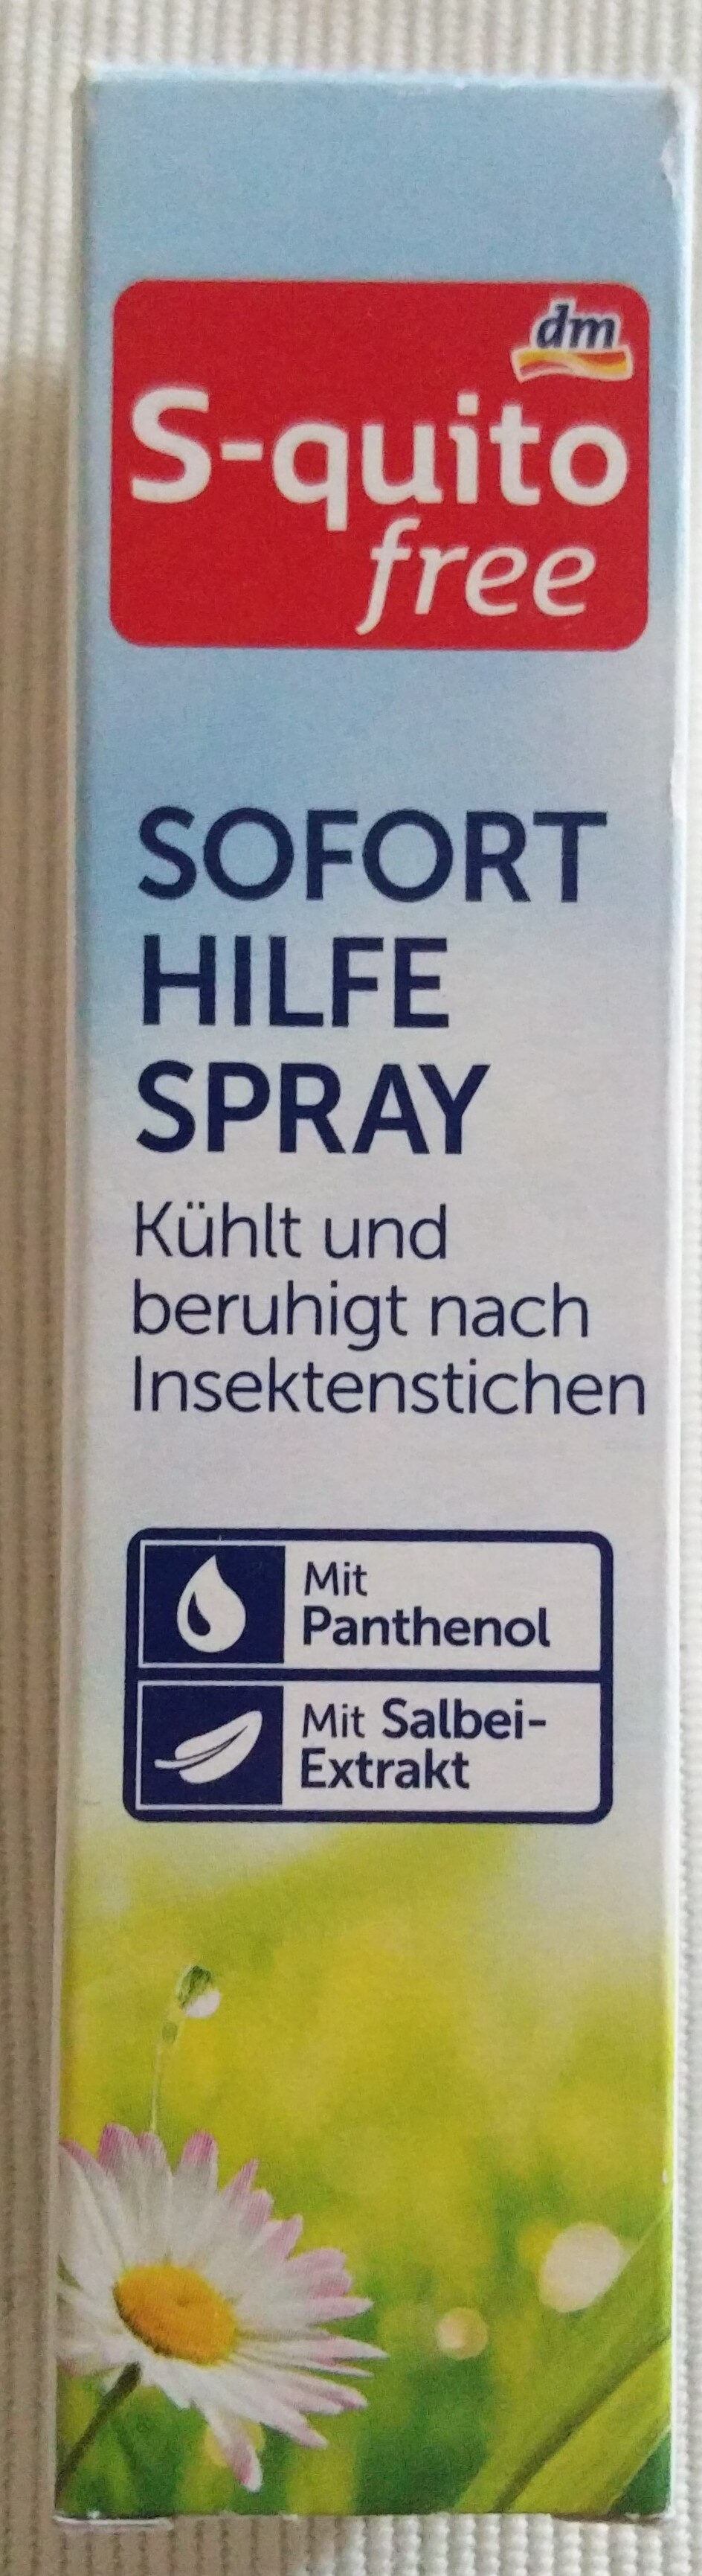 Soforthilfespray - 製品 - de